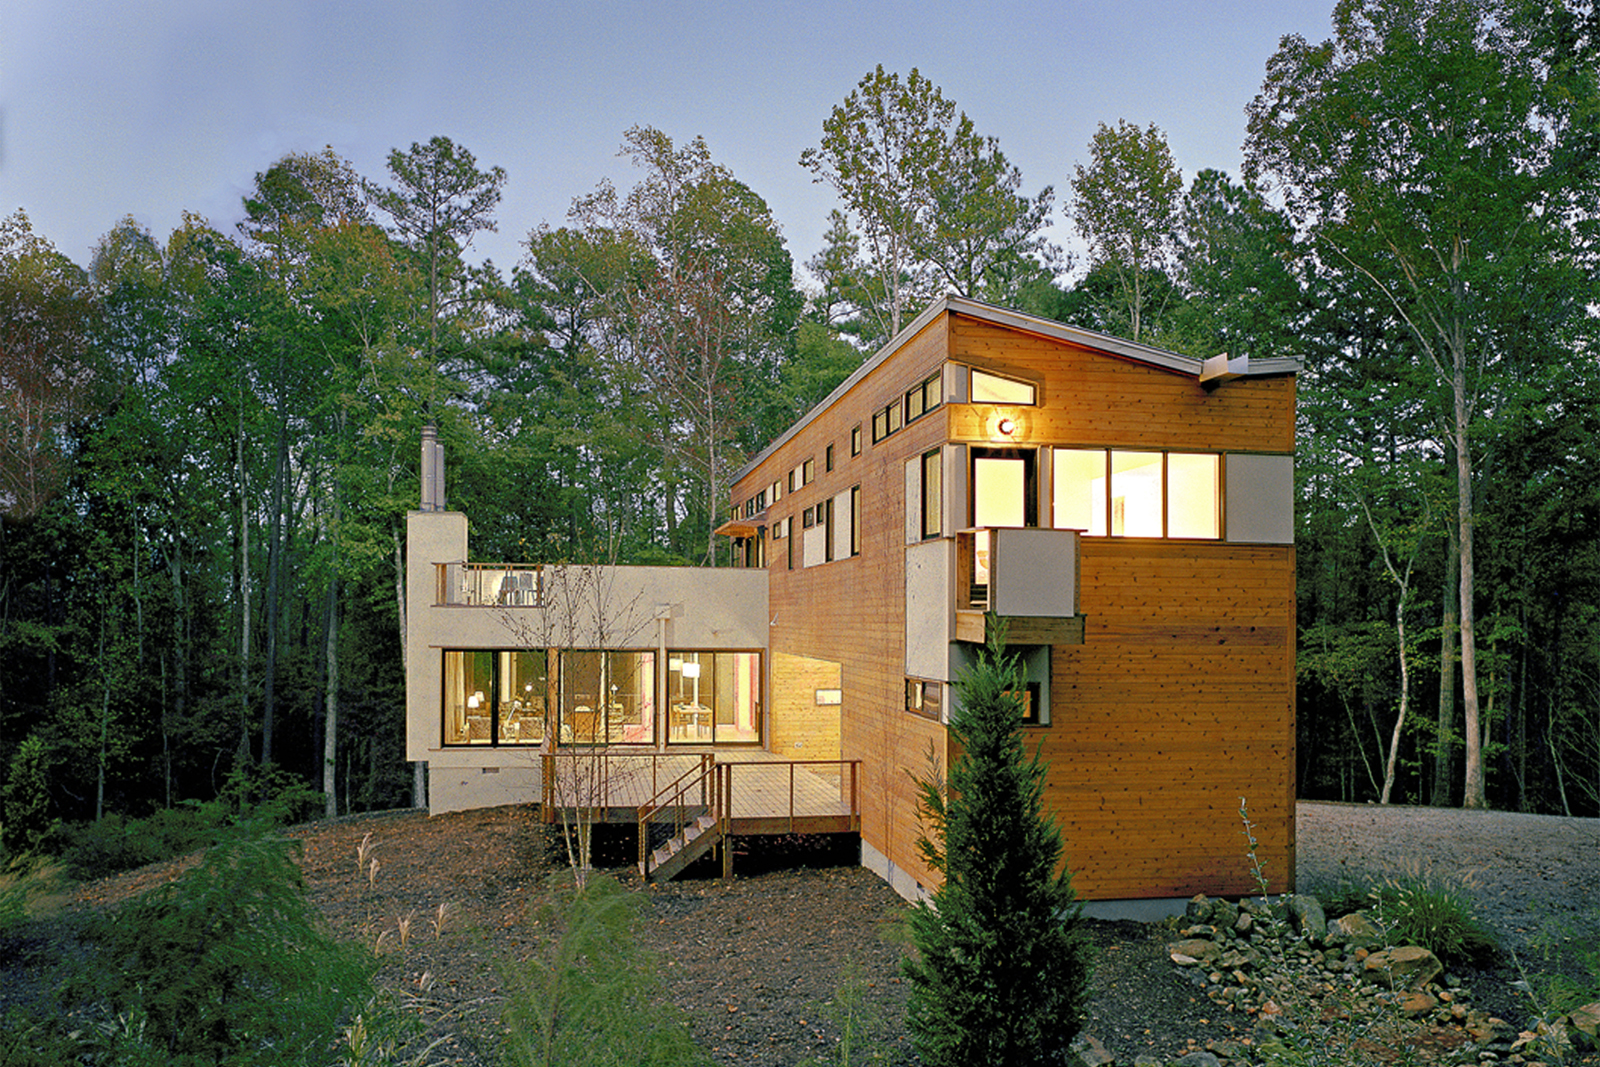 01-res4-resolution-4-architecture-modern-modular-house-prefab-dwell-home-exterior.jpg